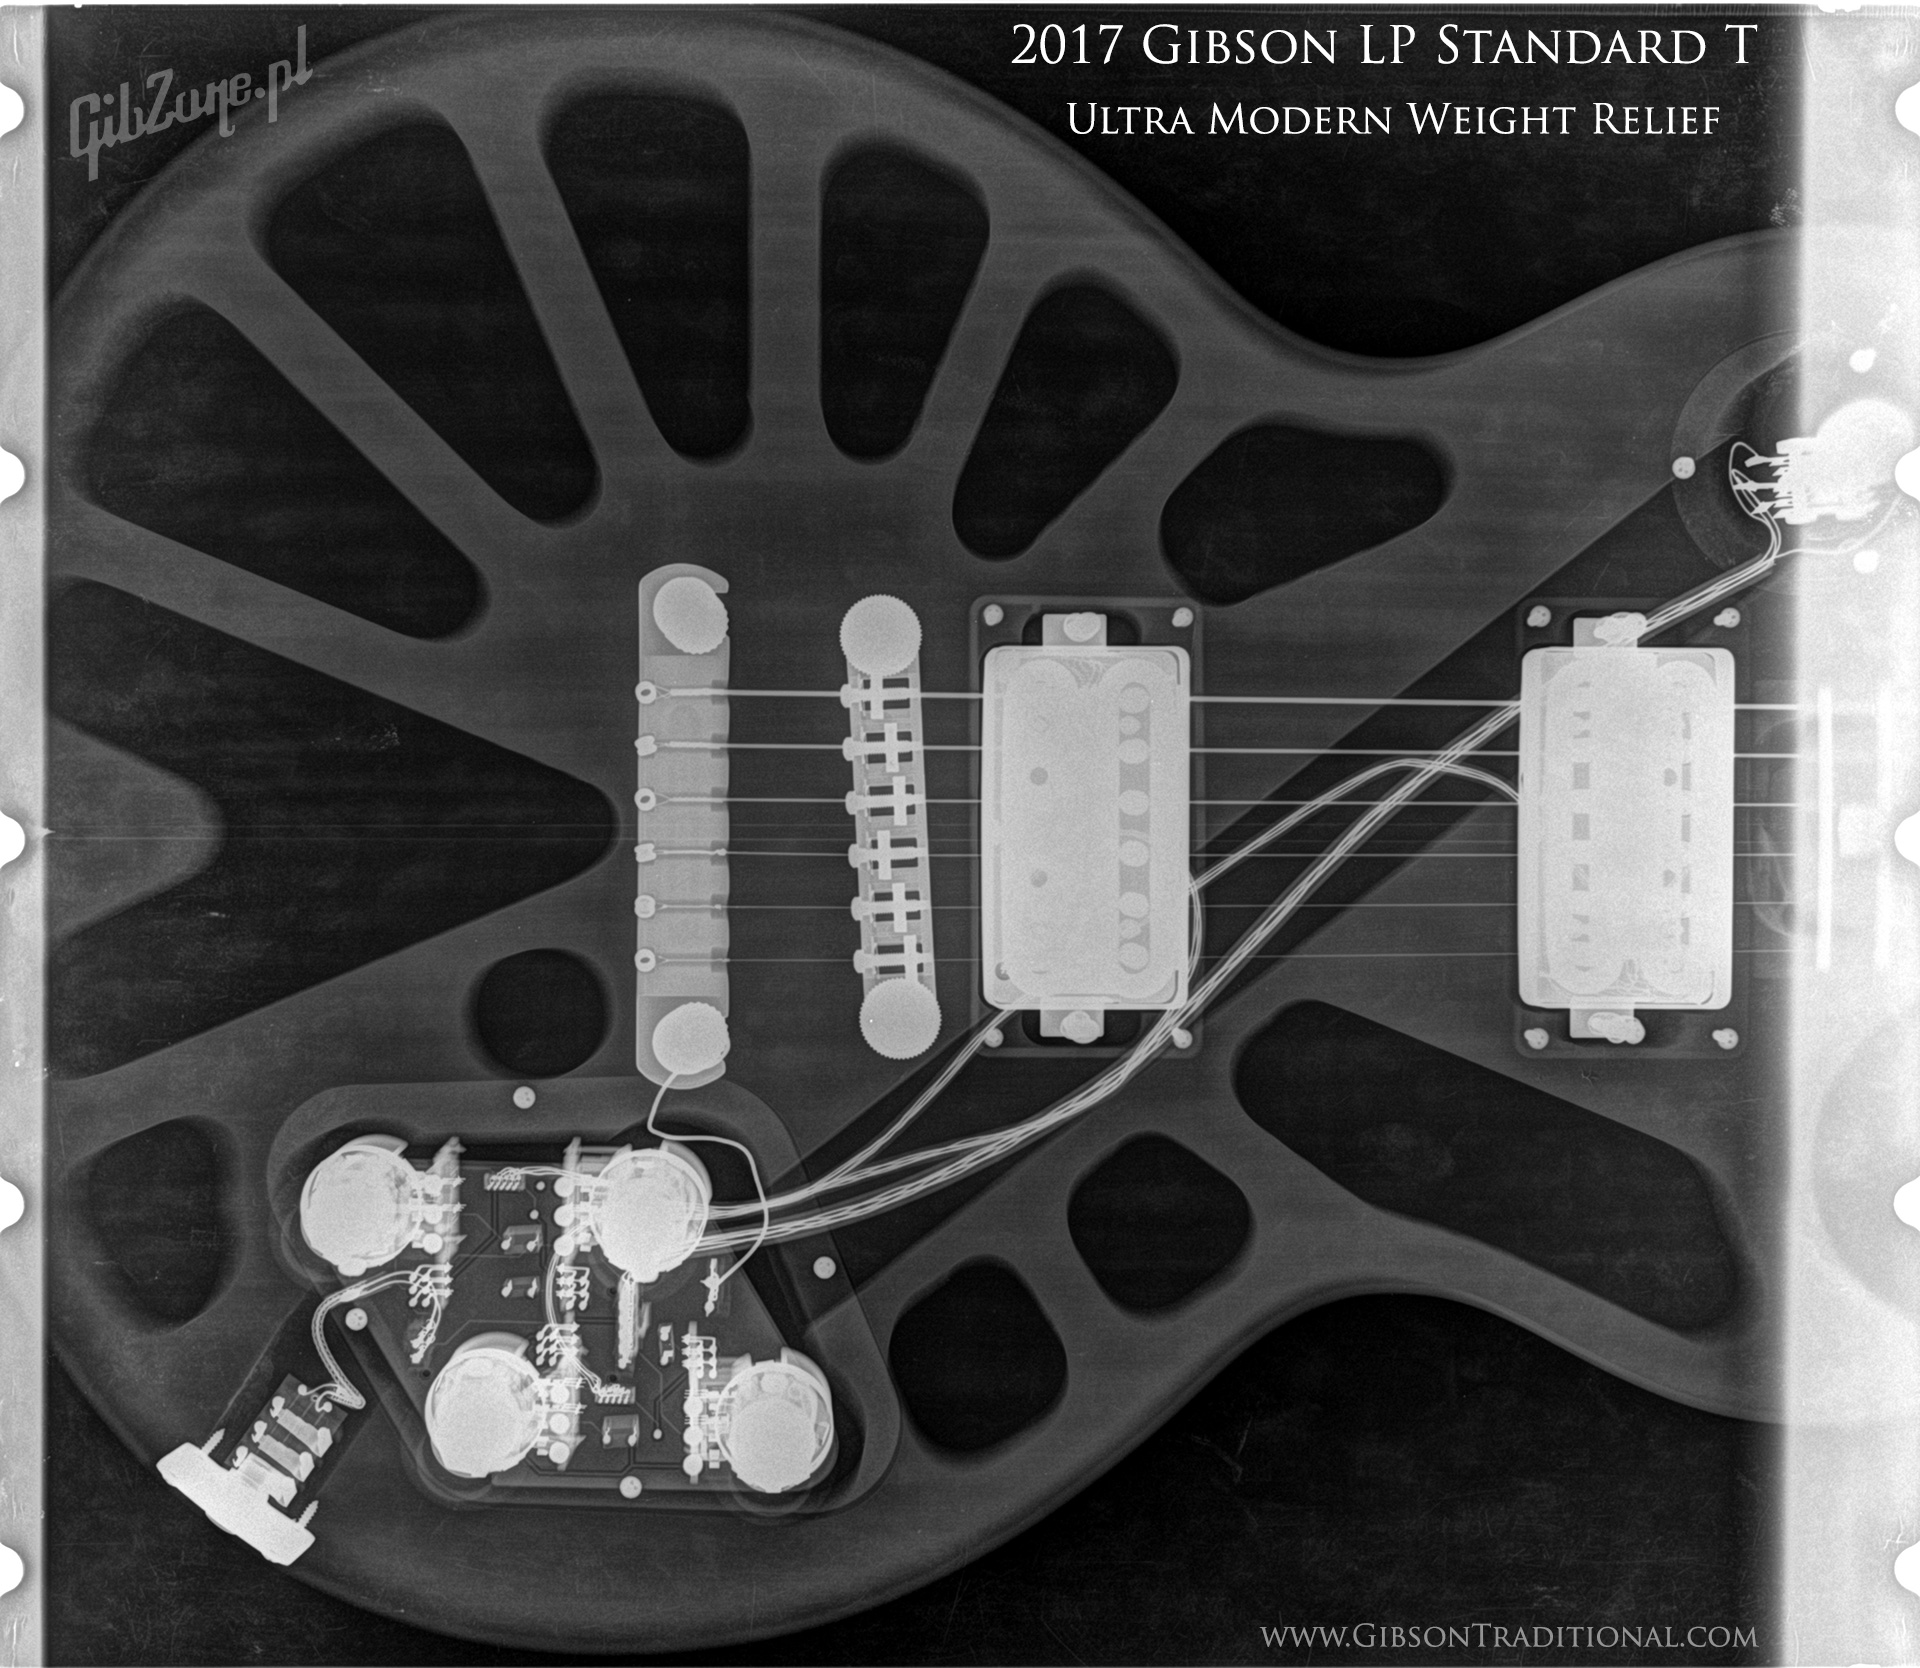 guitarristas: comprar en ebay (Gibson 335) Index